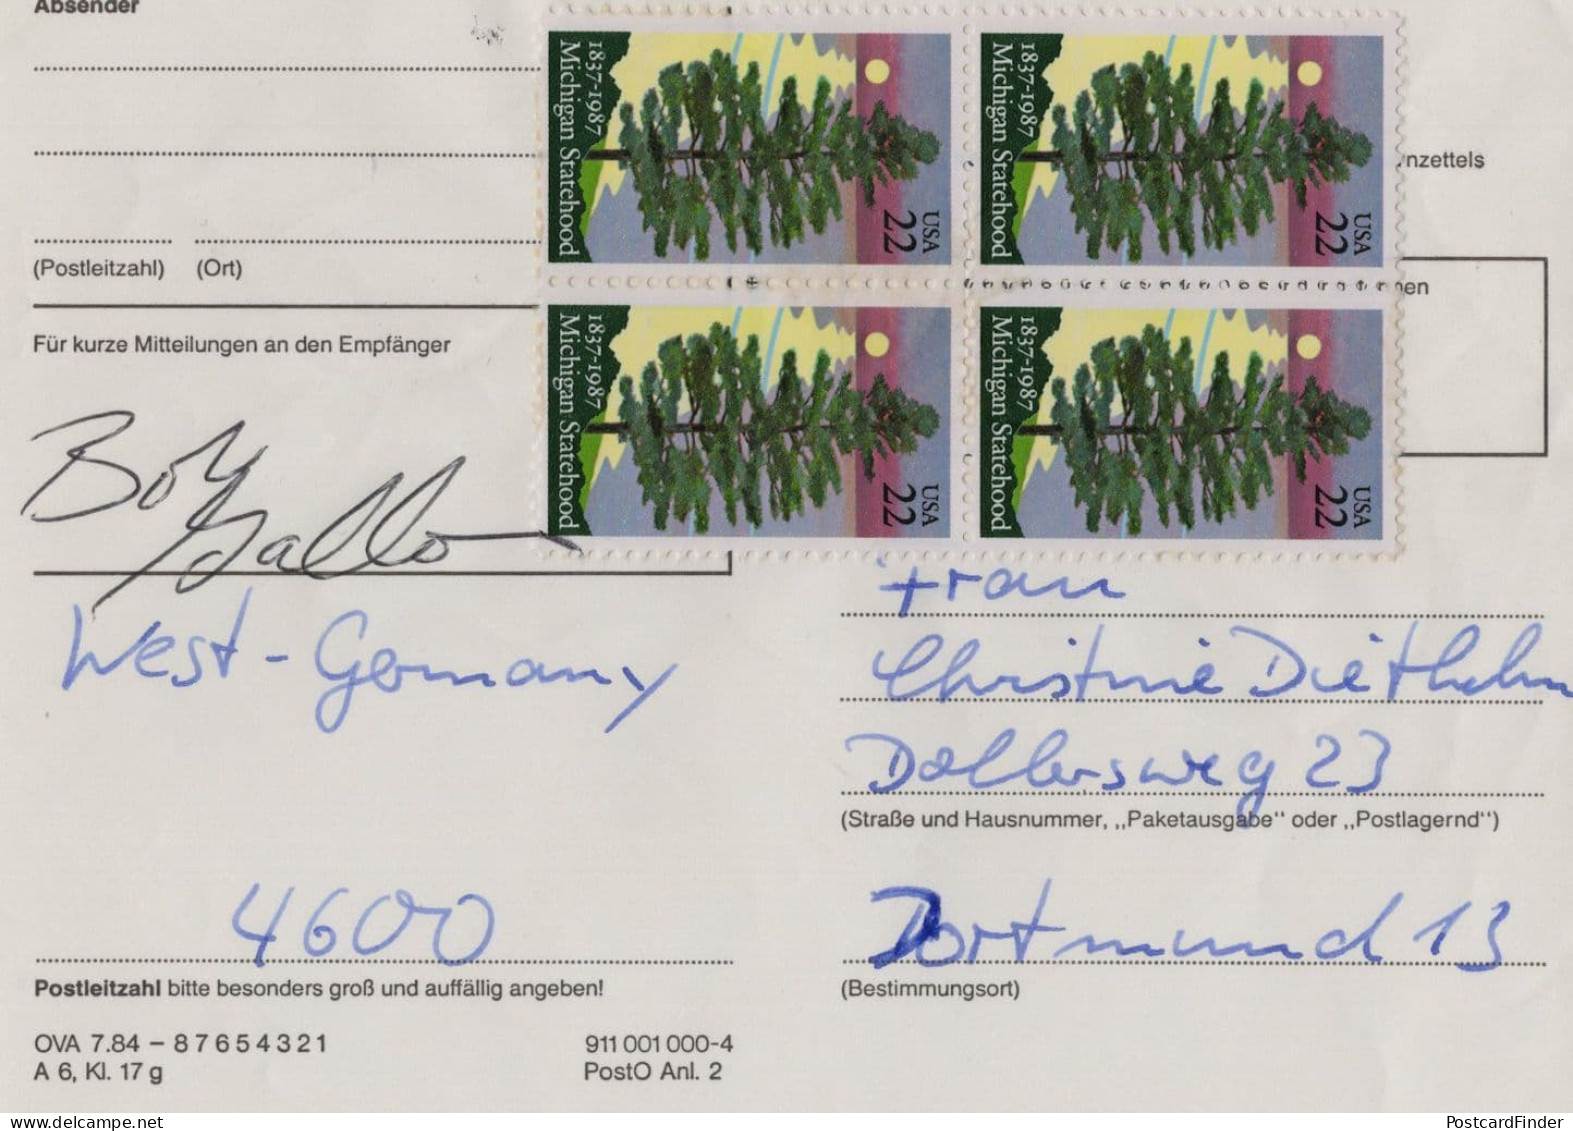 Robert Gallo AIDS HIV  Scientist Hand Signed Postal Envelope - Inventors & Scientists